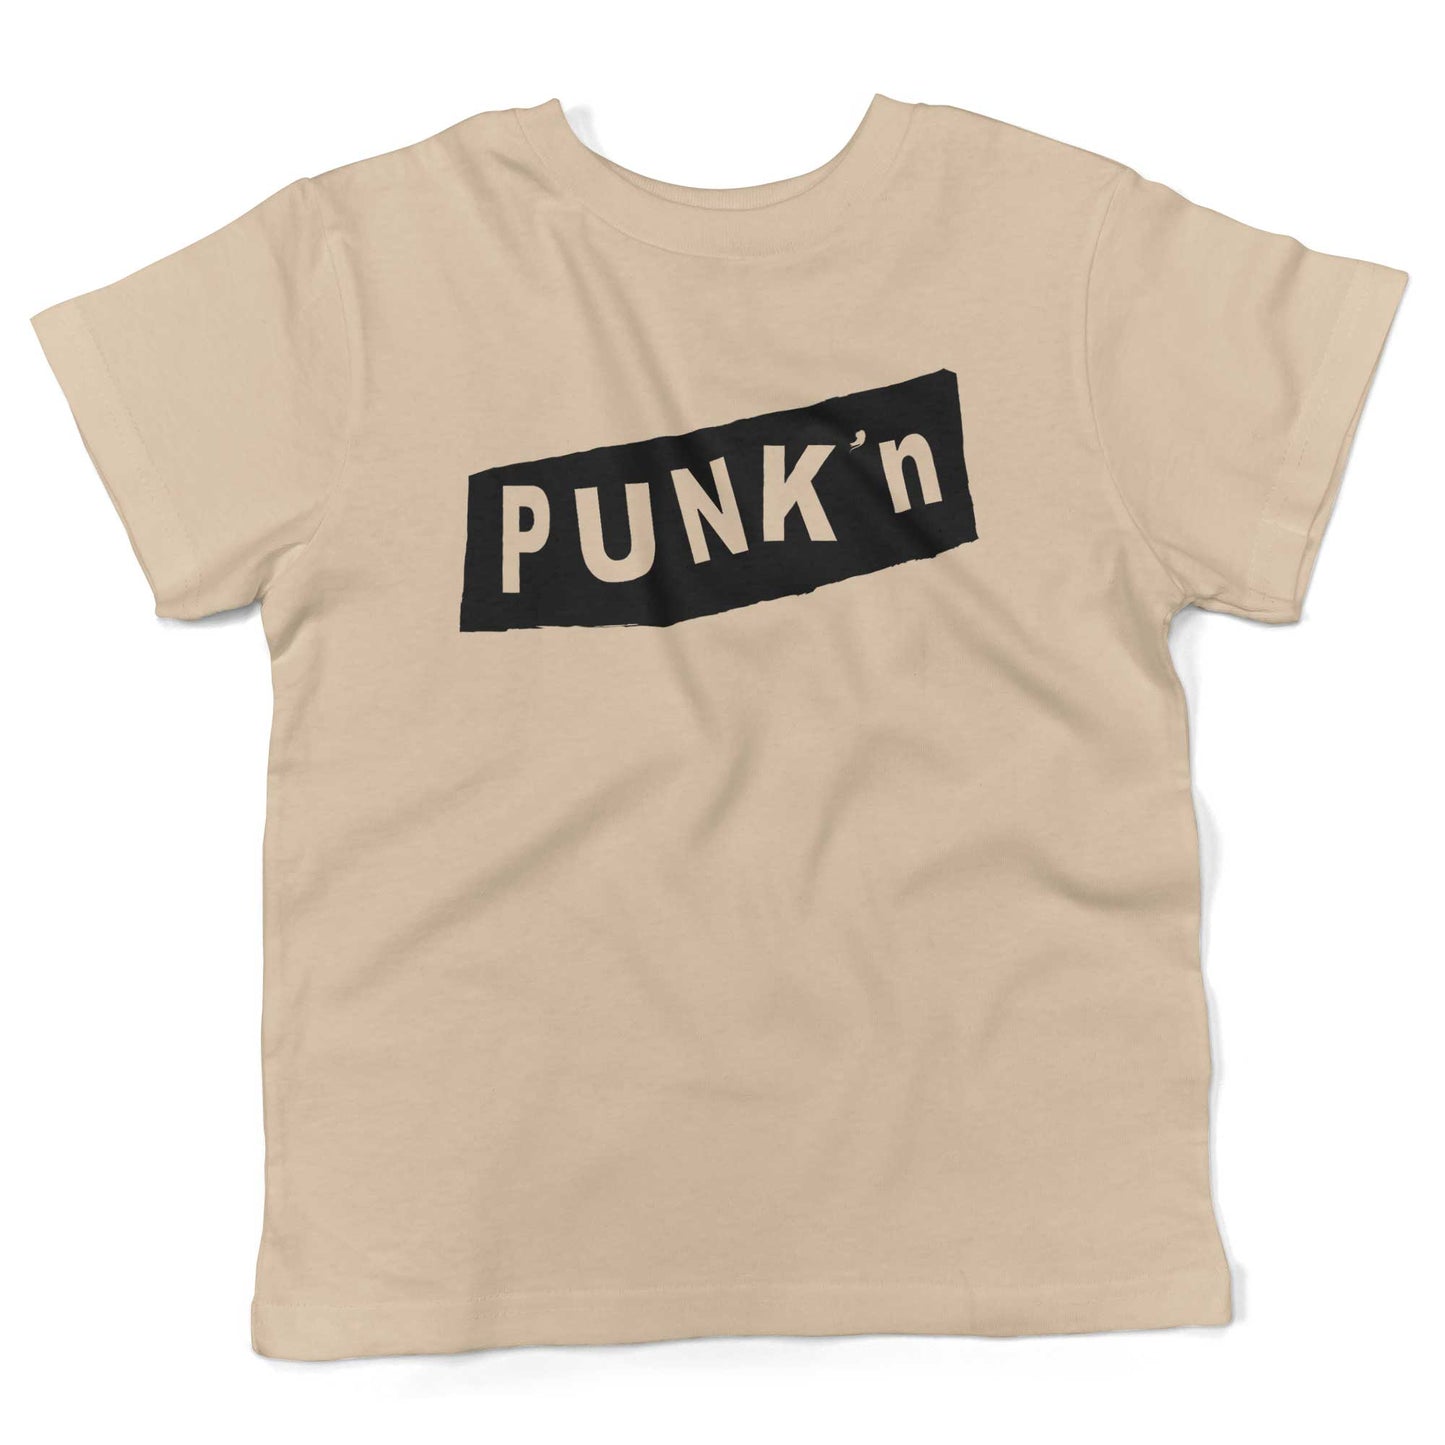 Pumpkin Punk'n Toddler Shirt-Organic Natural-2T